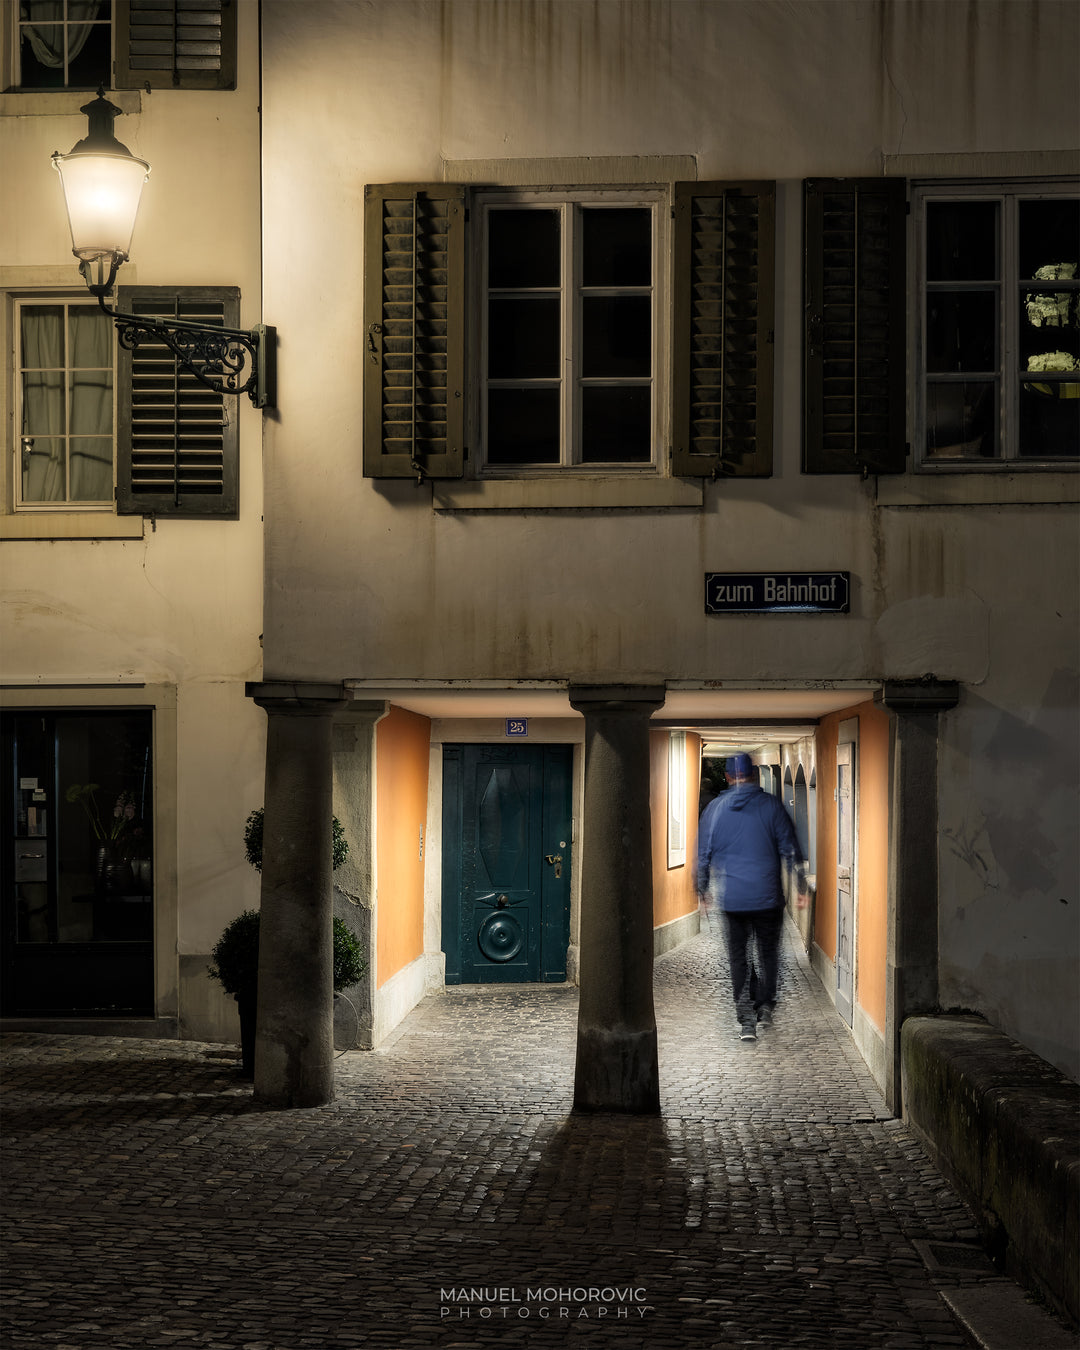 Cityscapes photo workshop - Zurich's most beautiful places